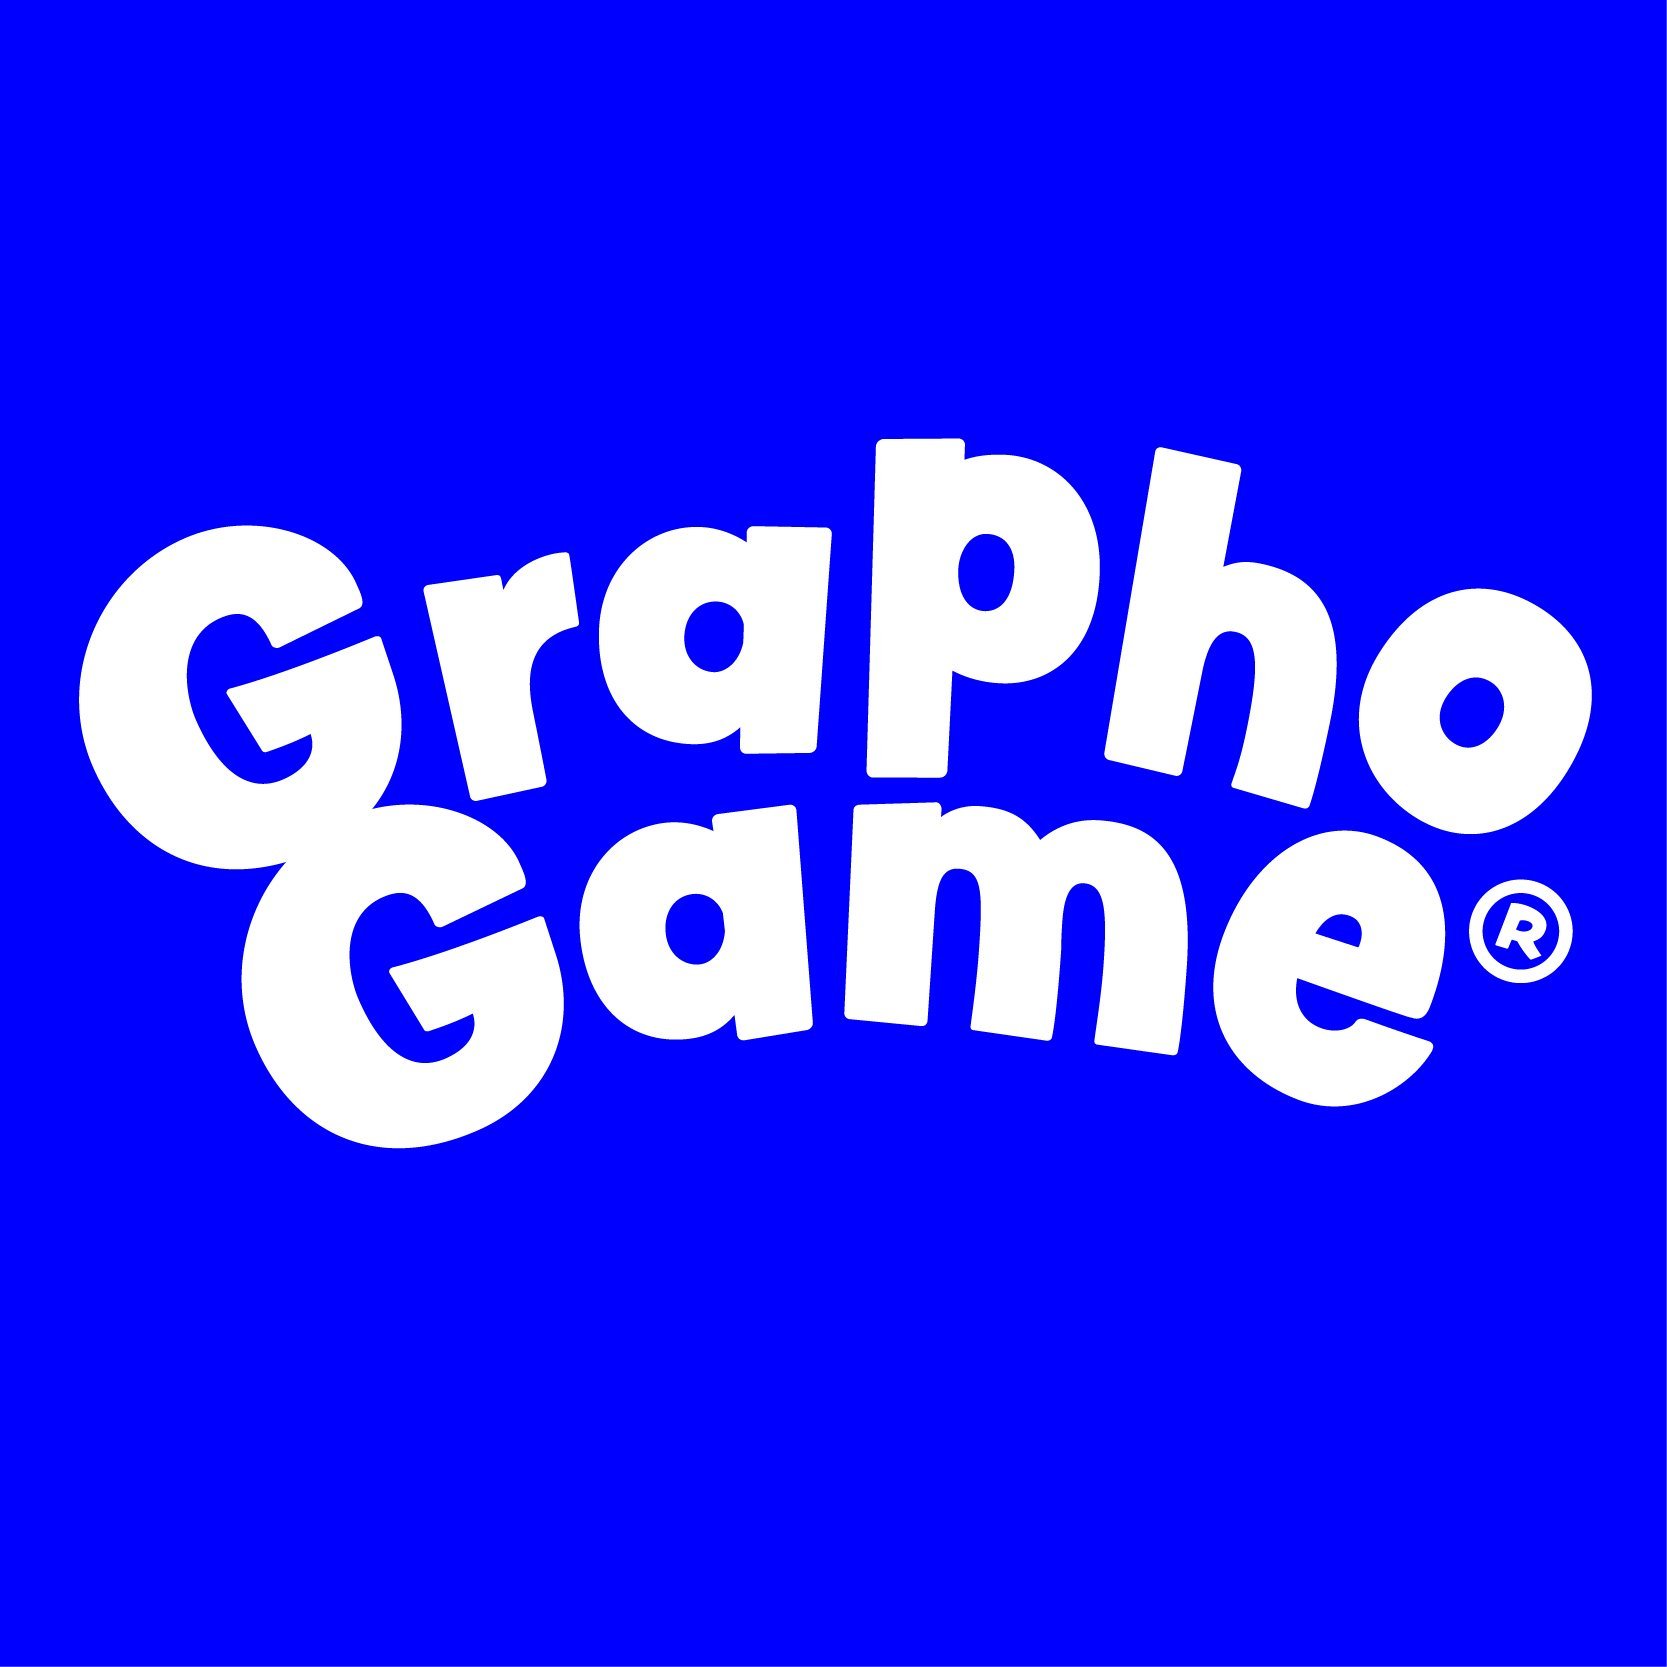 GraphoGame-some-logo-blue-inverted-no-text.jpg